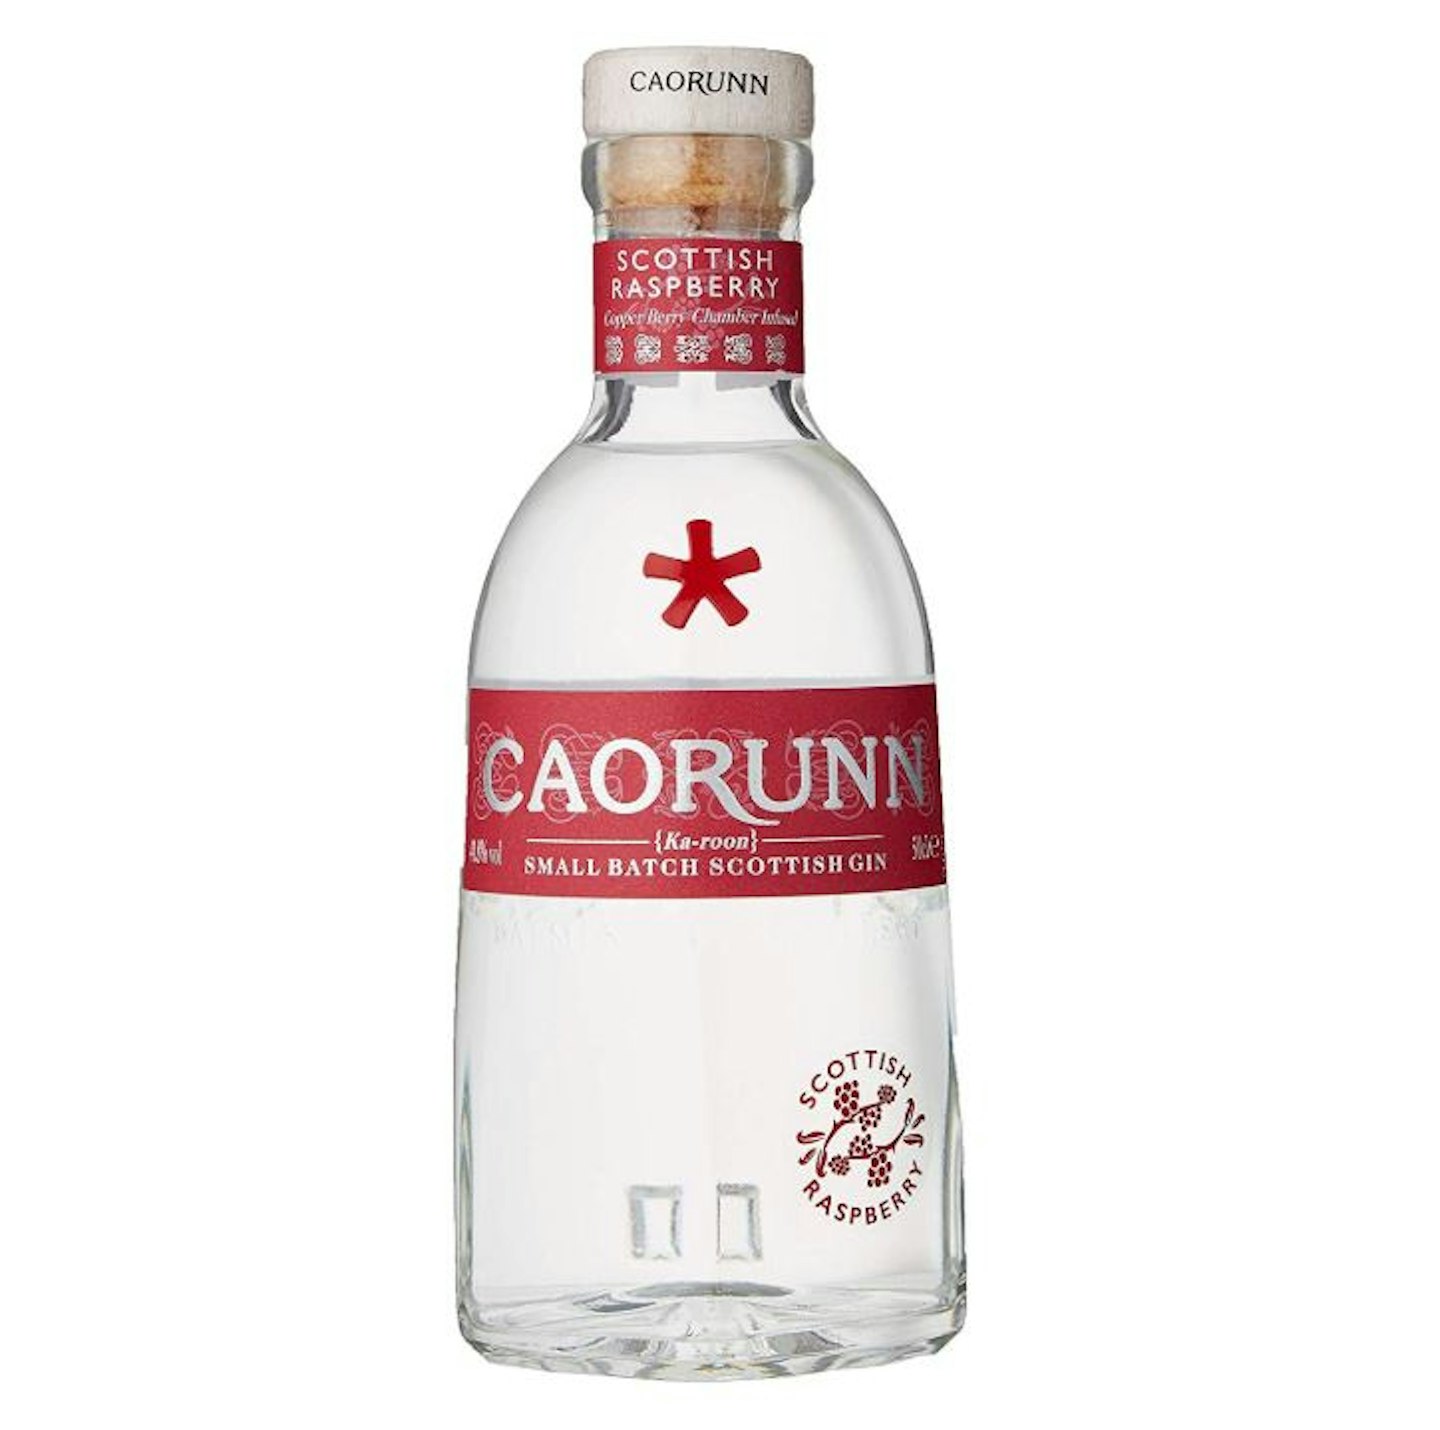 Caorunn Scottish Raspberry Gin, 20.75